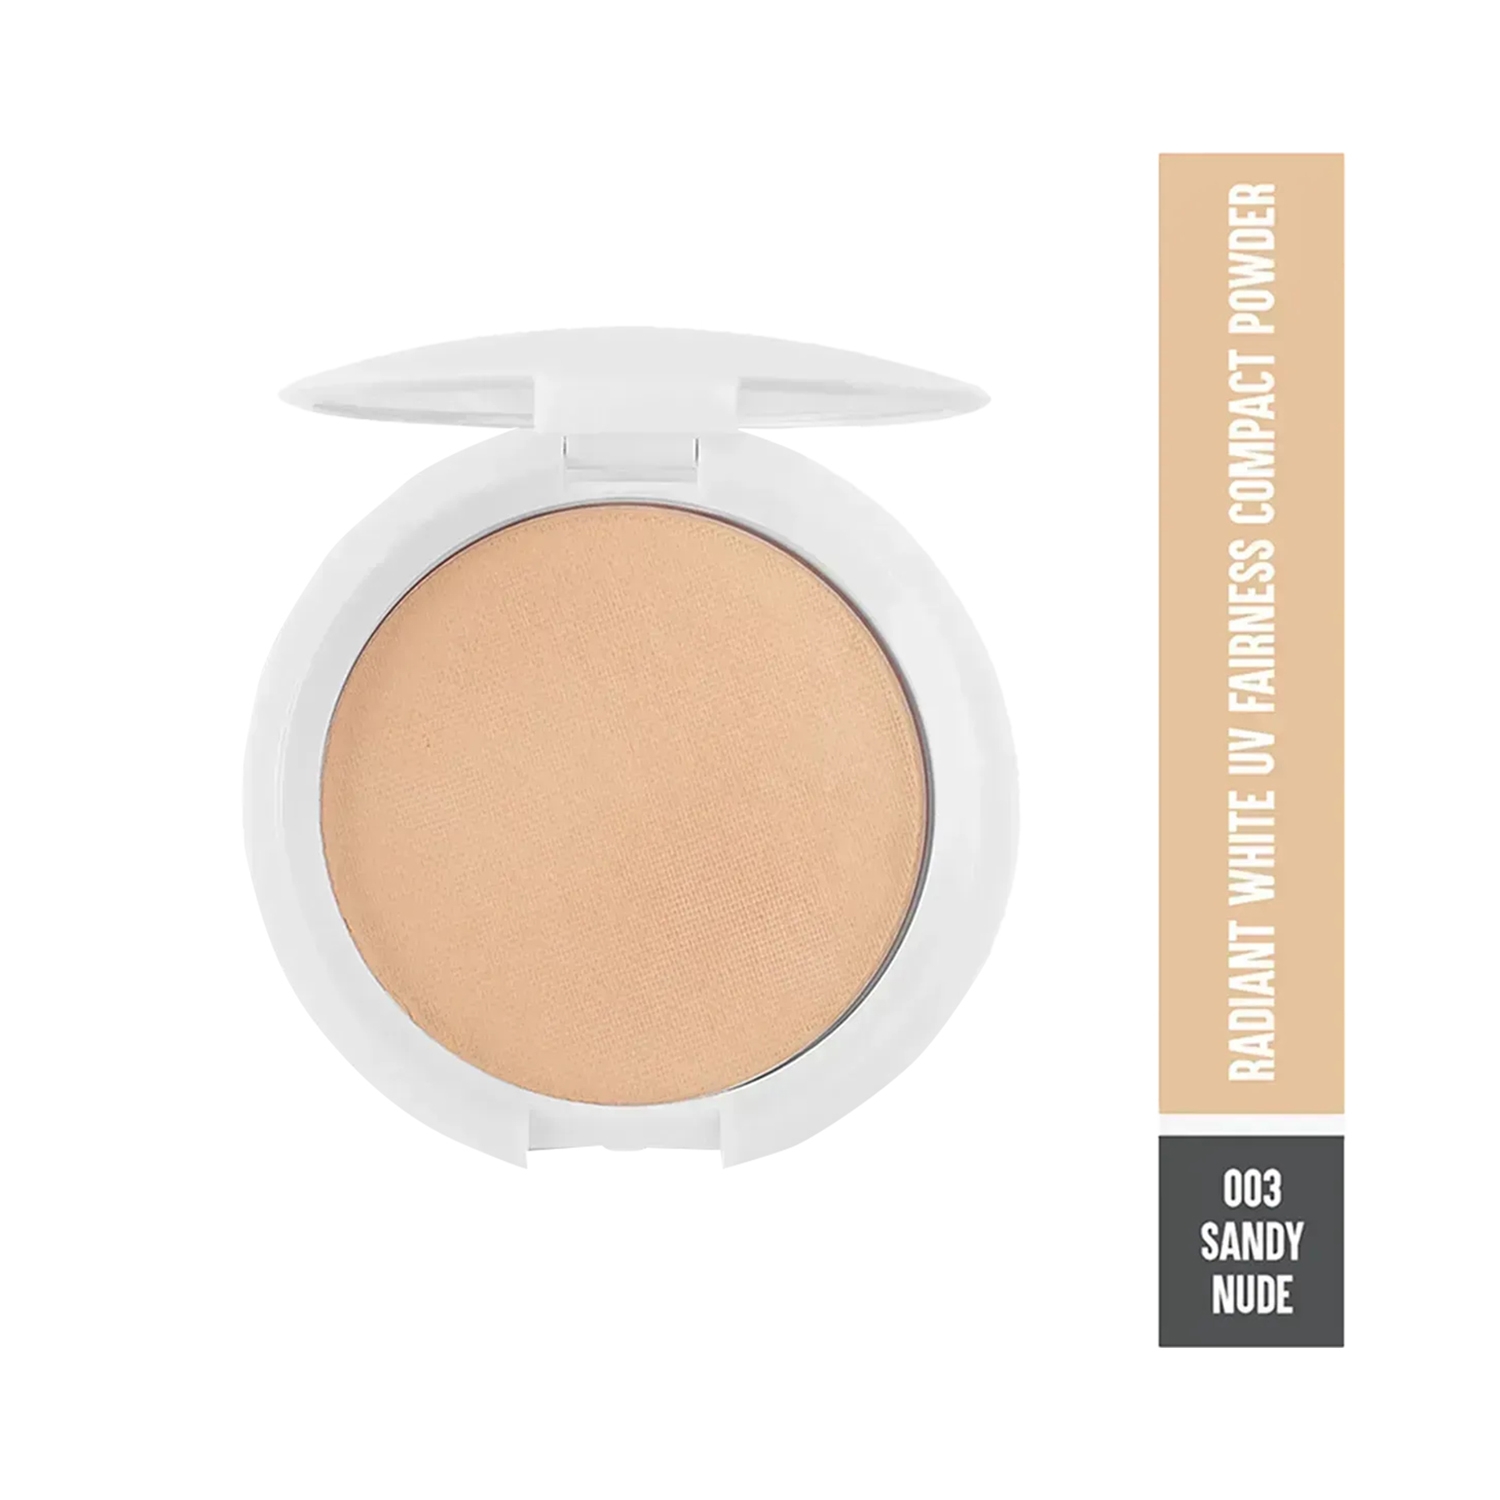 Colorbar | Colorbar Radiant White Uv Fairness Compact Powder - 003 Sandy Nude (9gm)